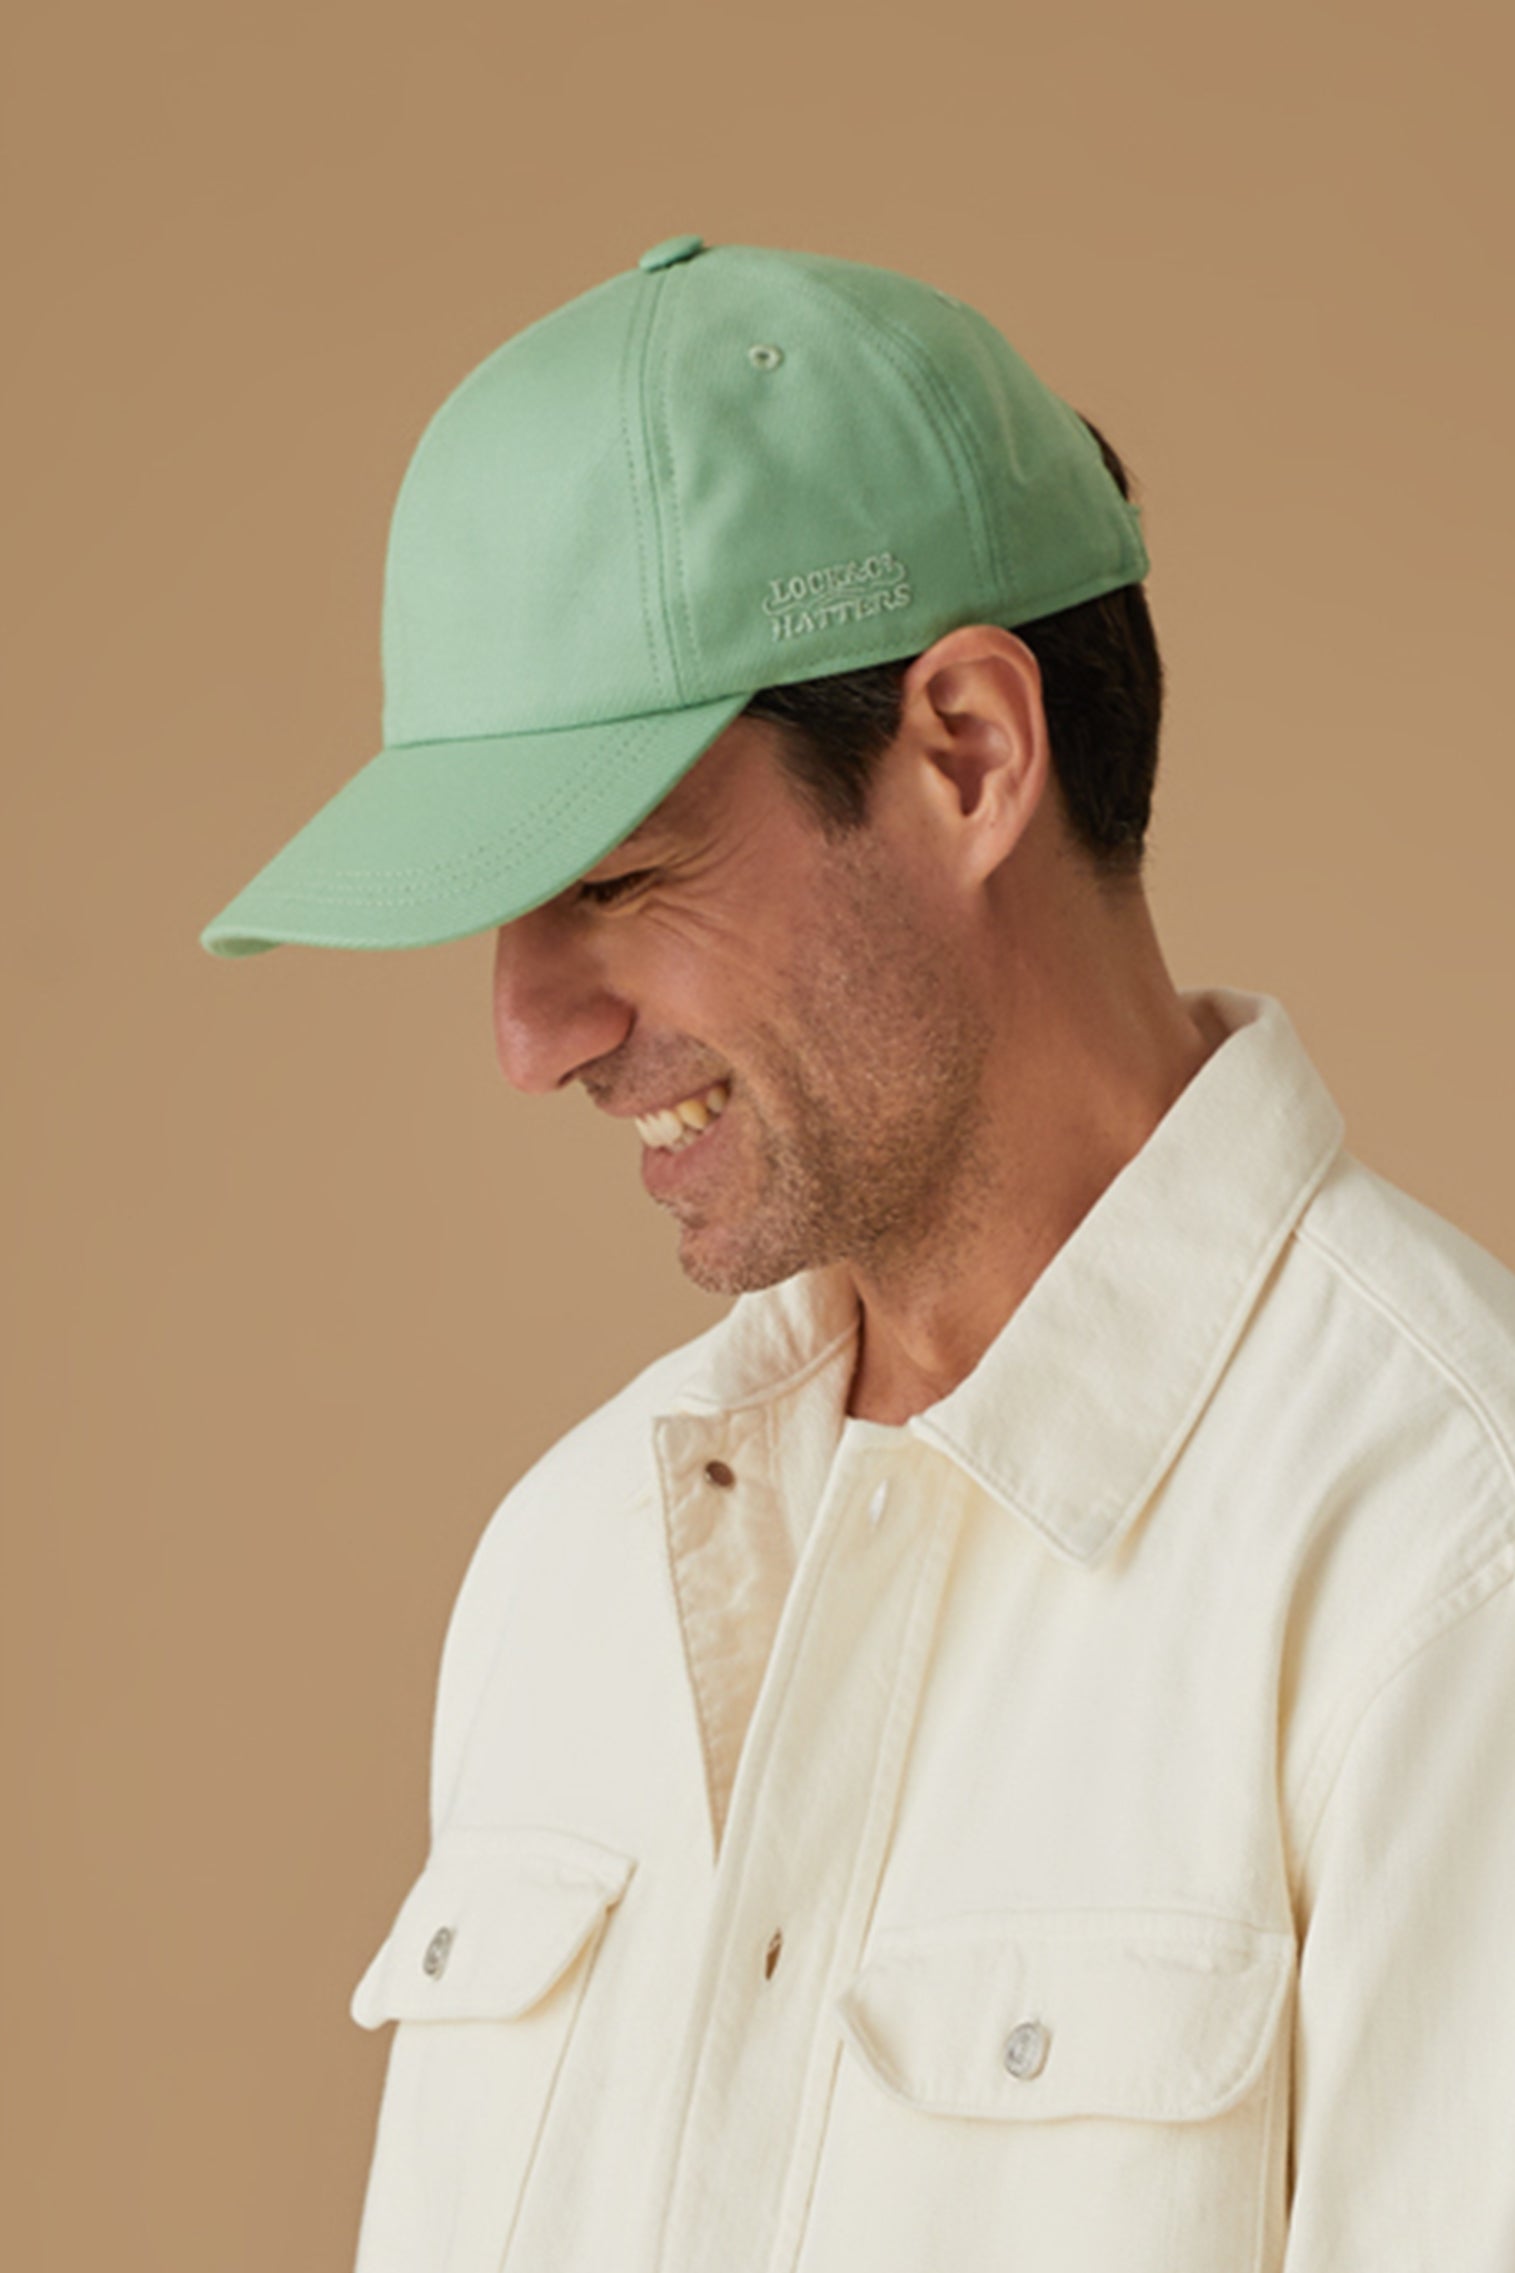 Adjustable Green Baseball Cap - Baseball Caps - Lock & Co. Hatters London UK